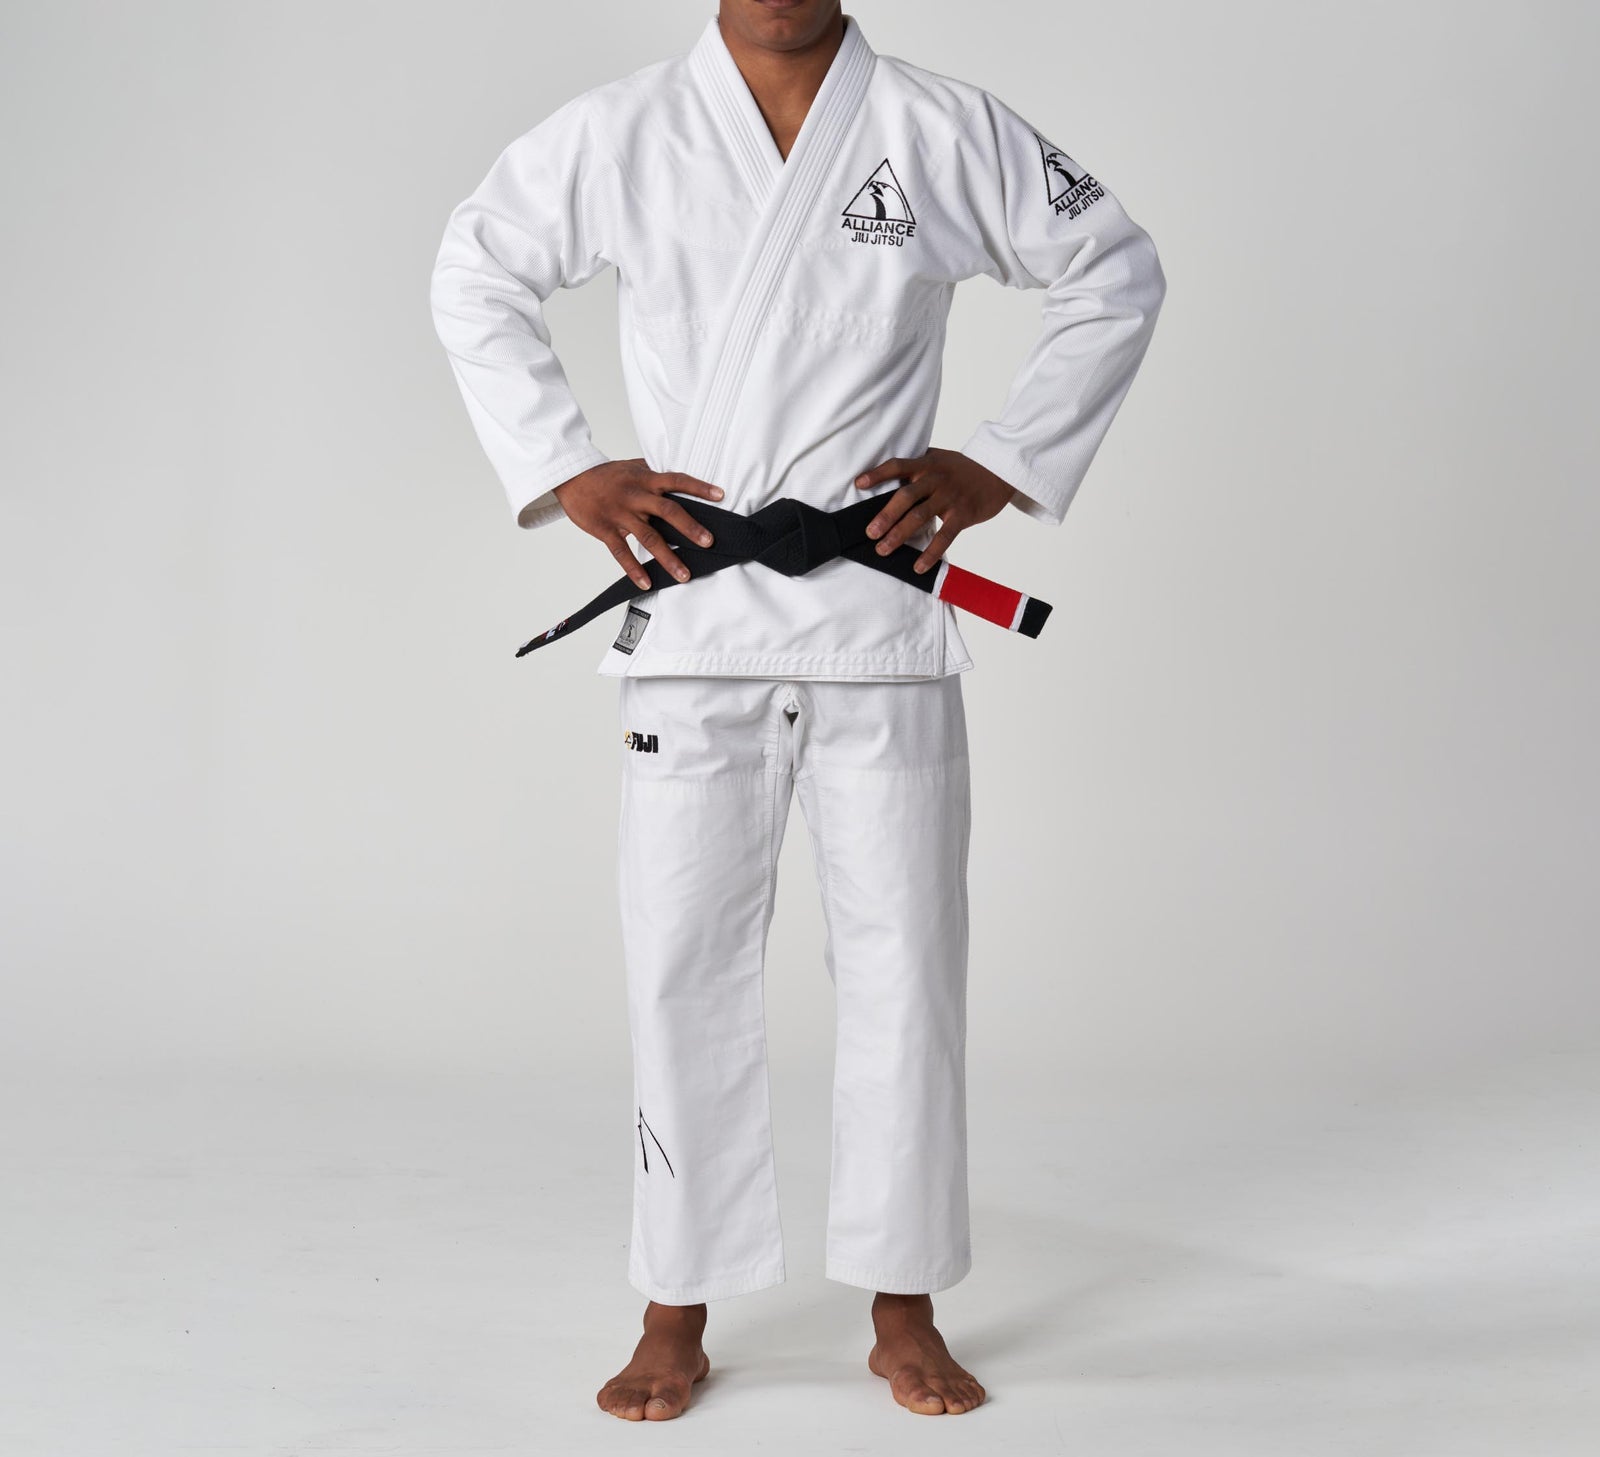 Alliance Pro Training Jiu Jitsu Gi - A00 / White